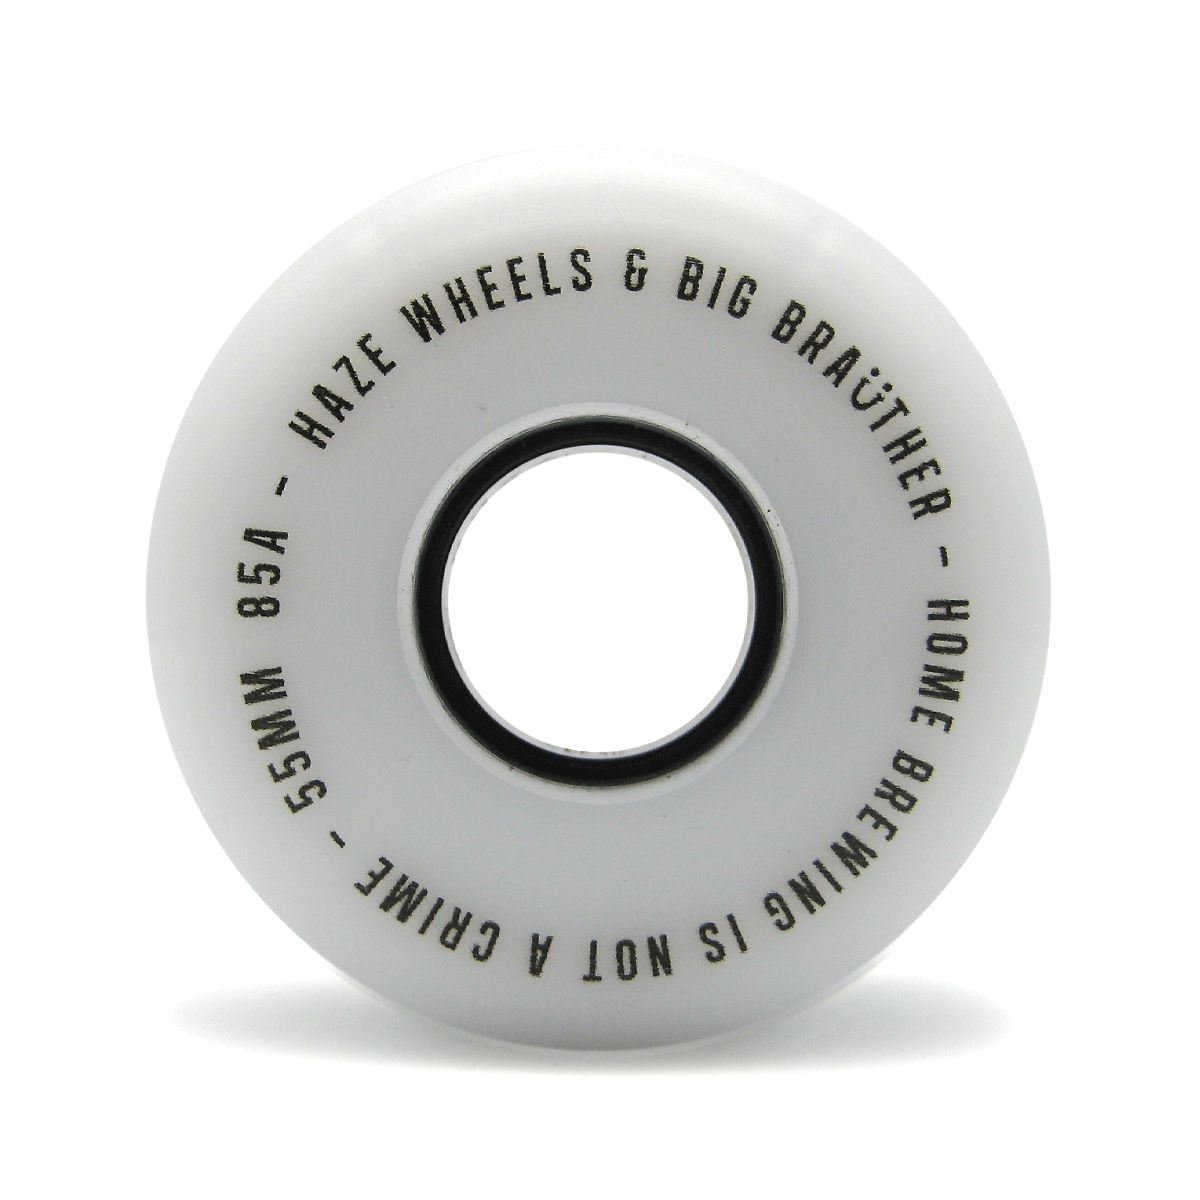 Haze wheels X Big Brauther 85A 55mm white